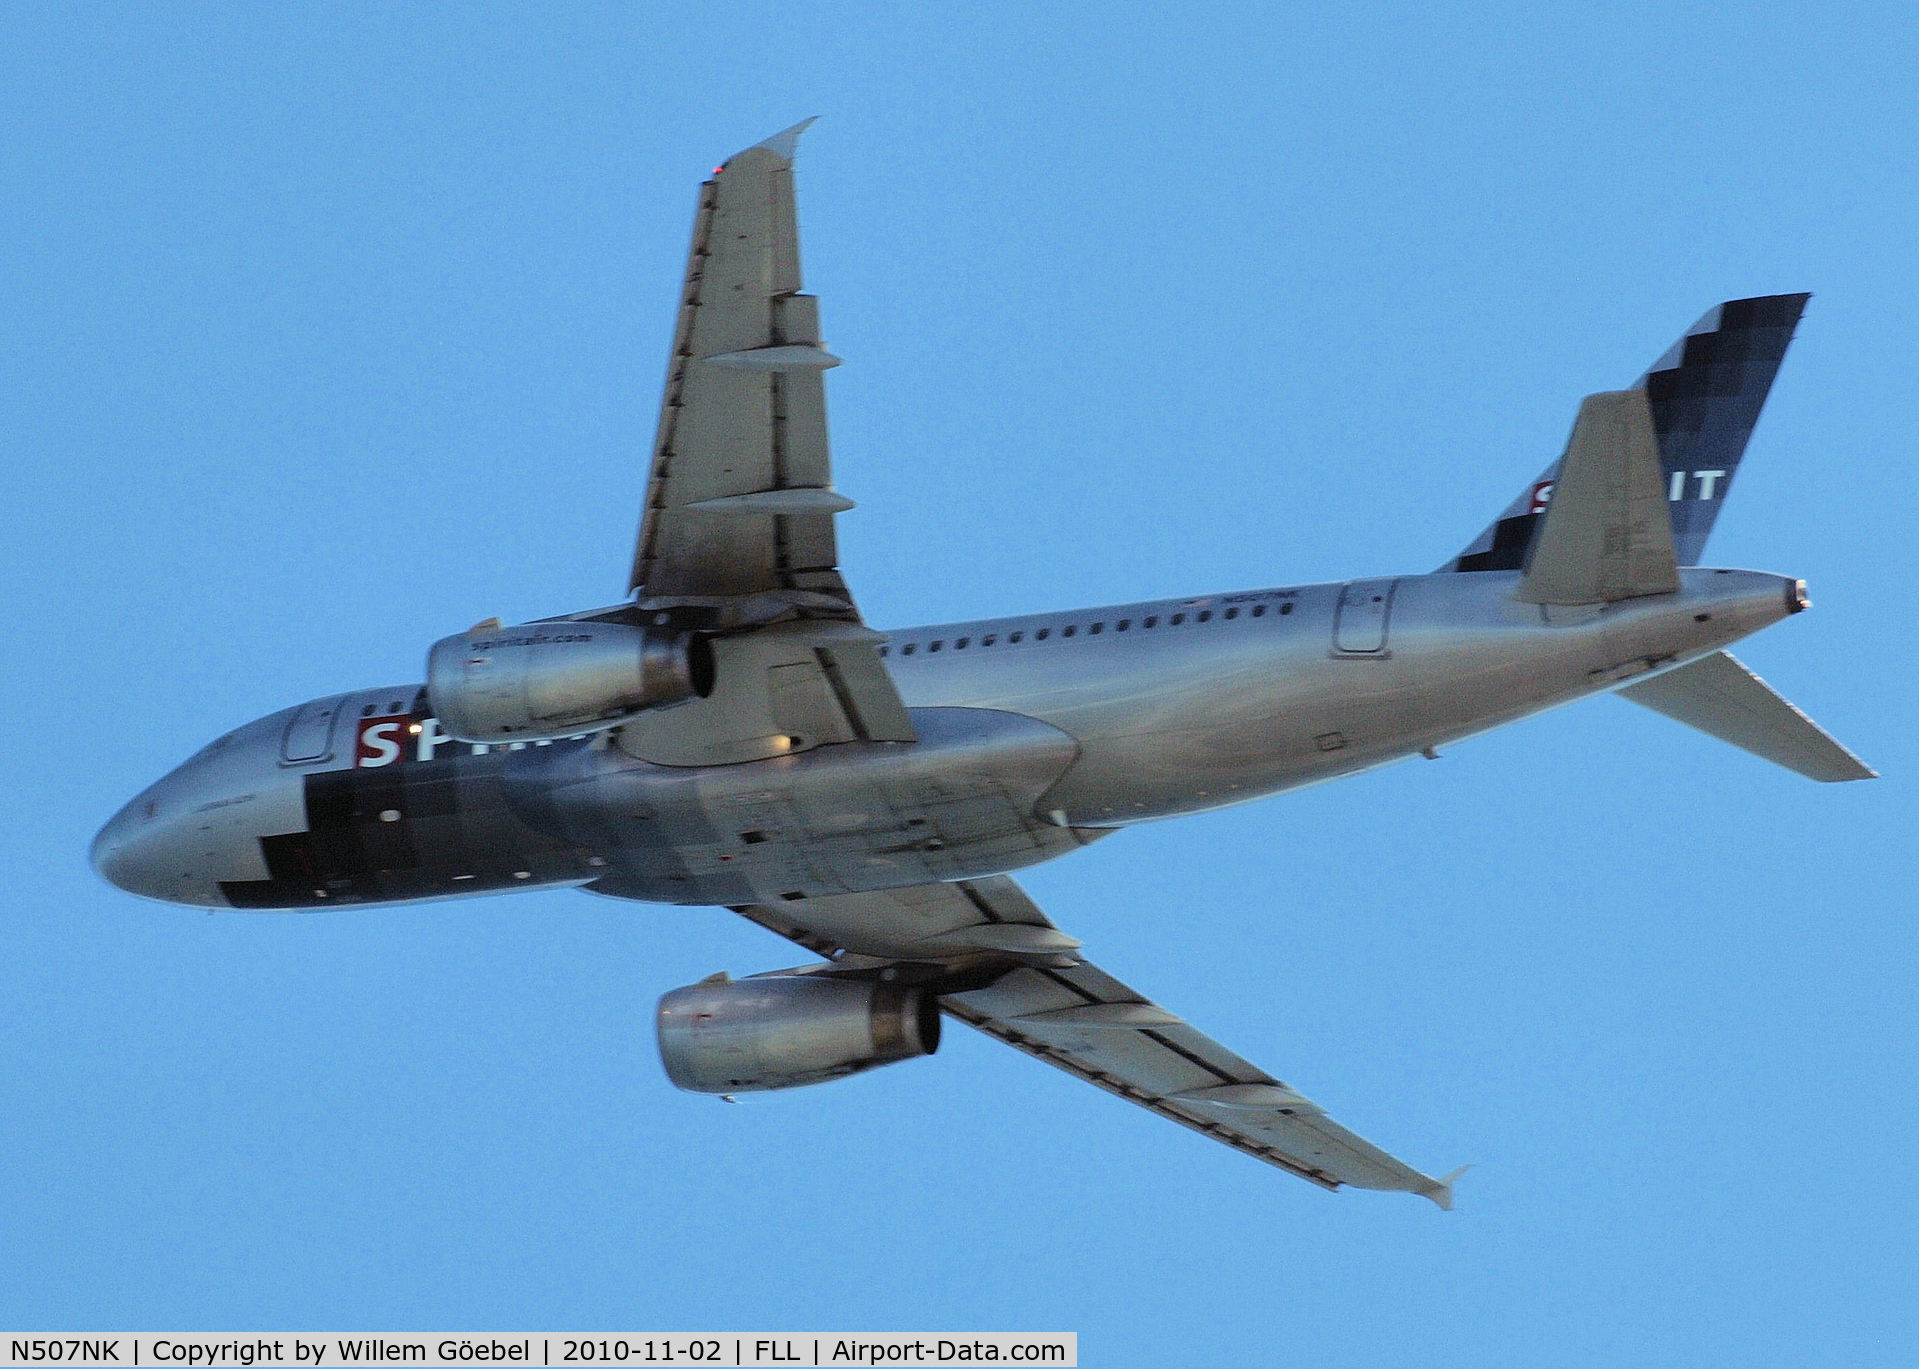 N507NK, 2005 Airbus A319-132 C/N 2560, Landing on the Airport FLL